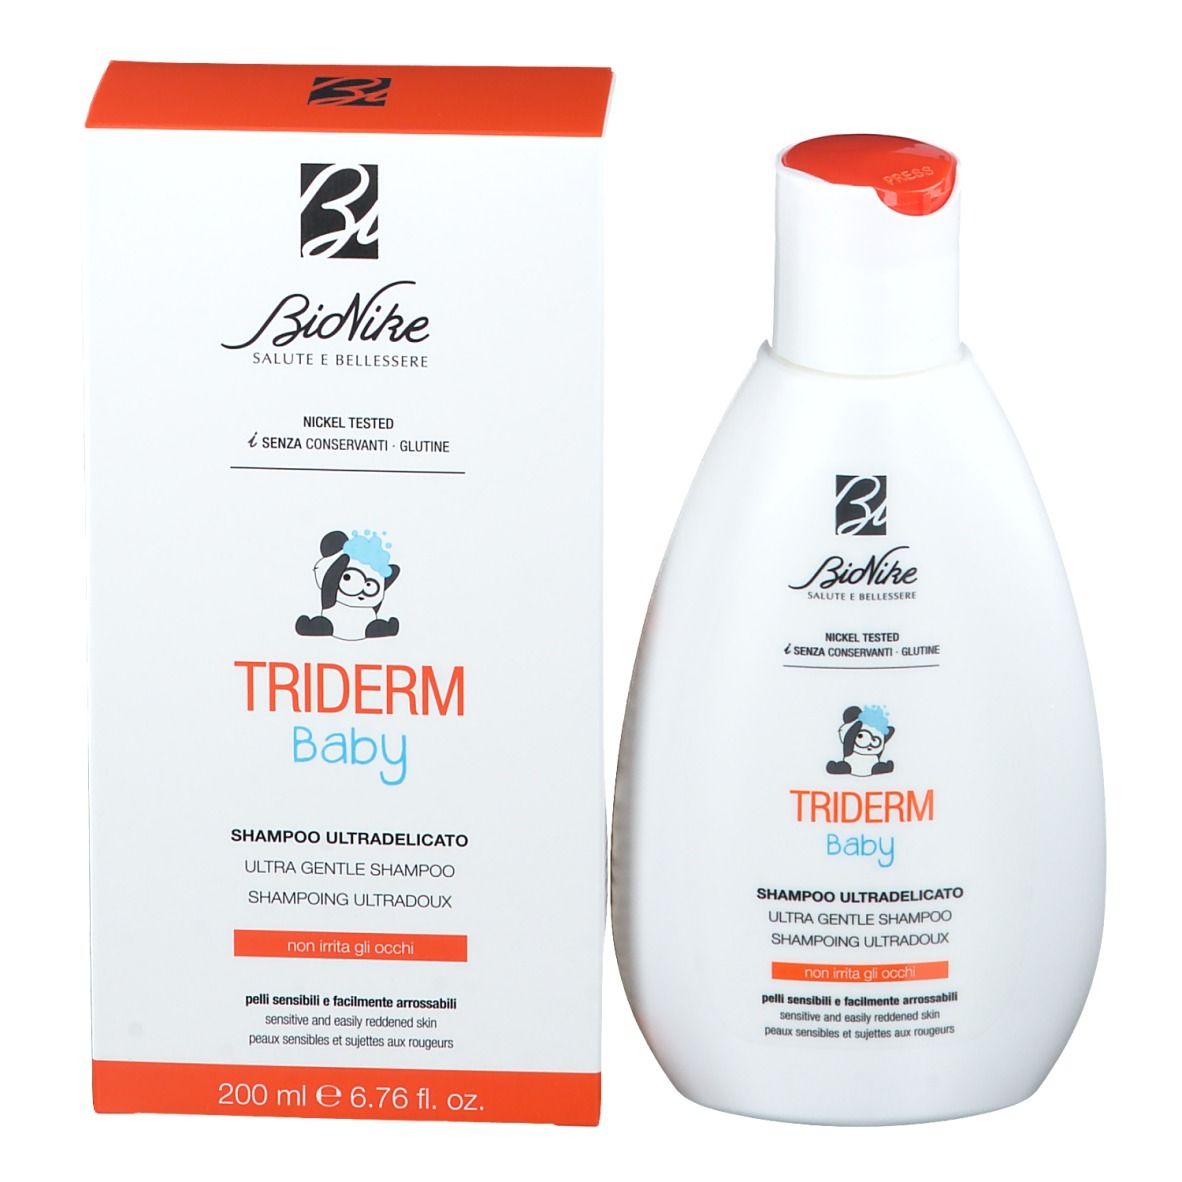 BioNike Triderm Baby Shampoo Ultradelicato